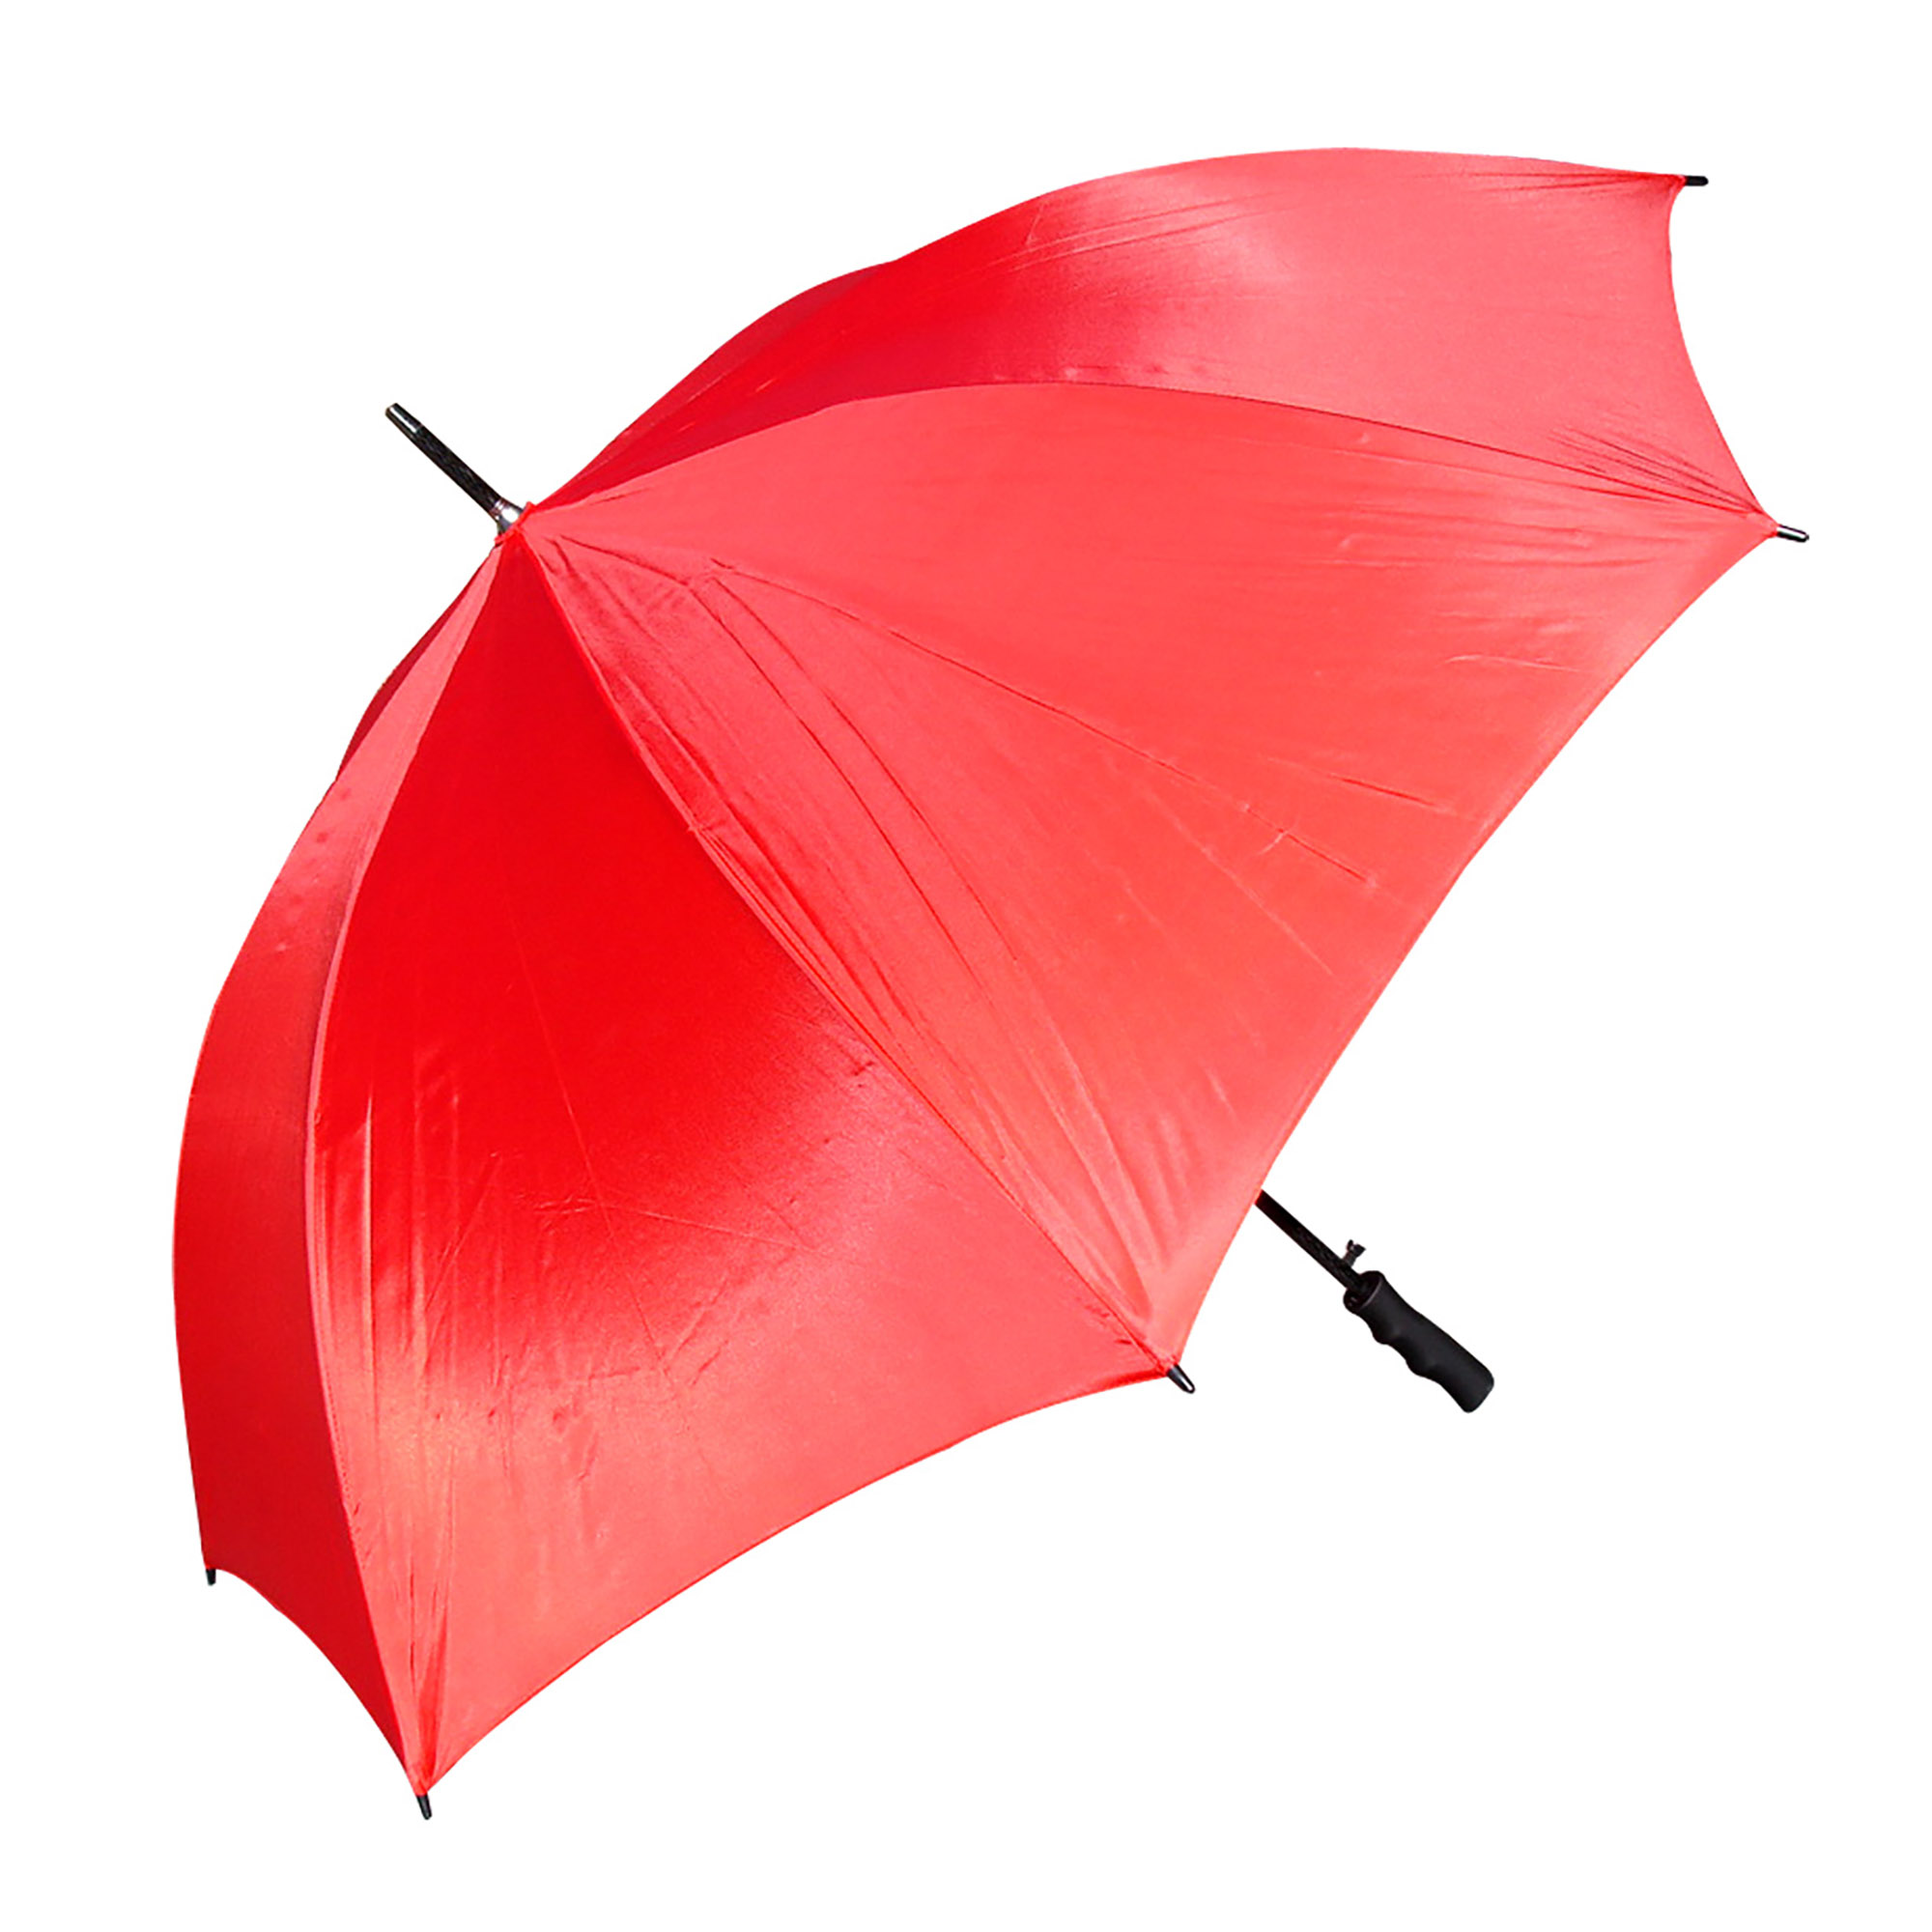 Bulk Promotional Red Sands Umbrella Online In Perth Australia